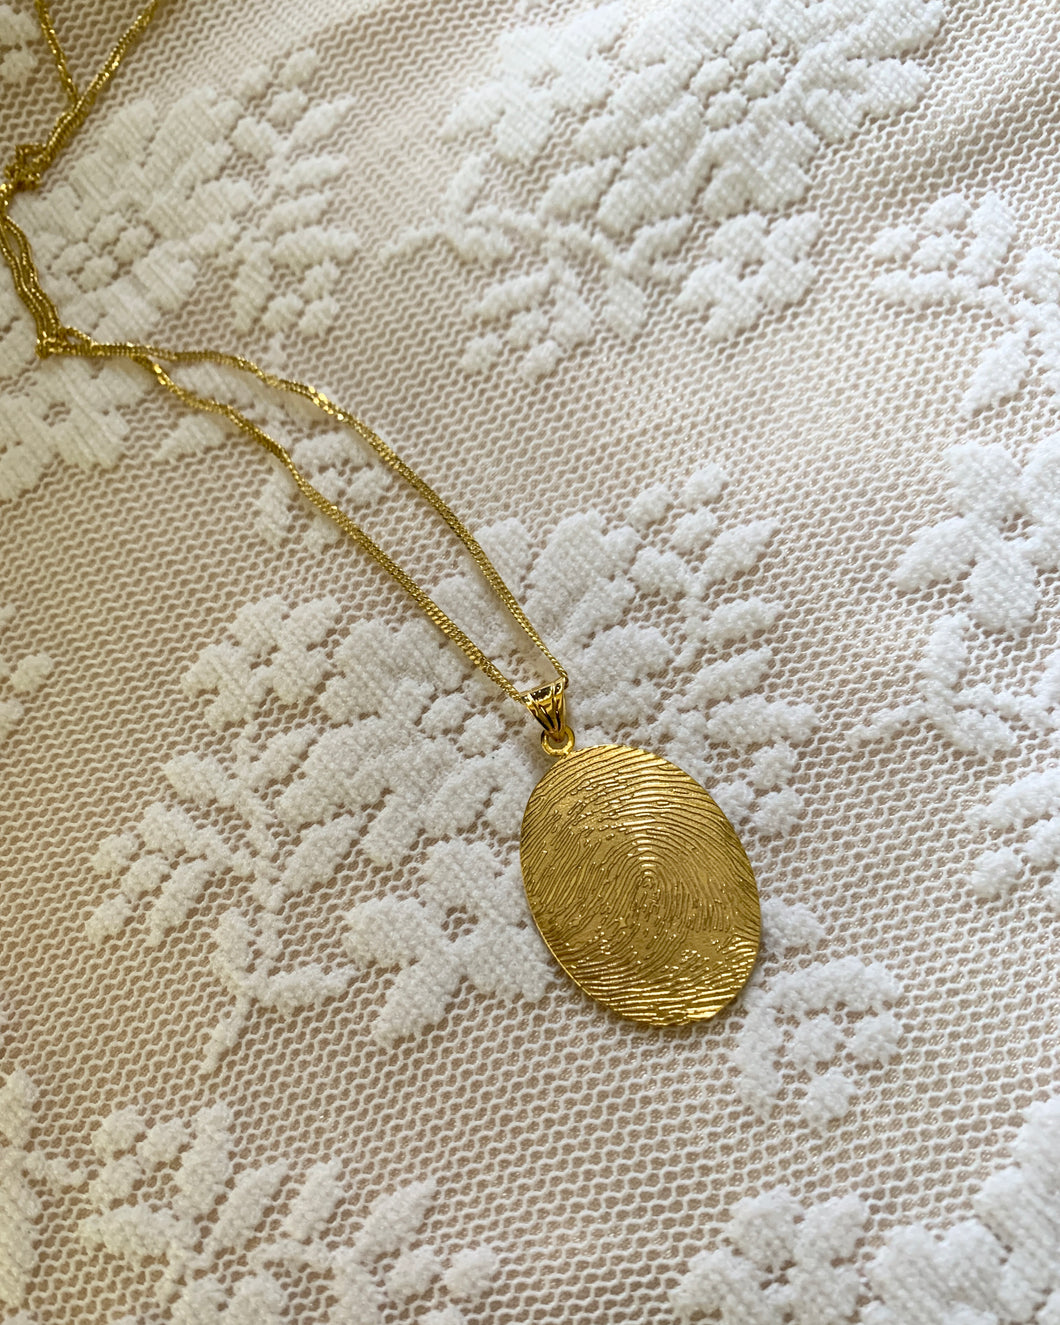 A yellow gold fingerprint or thumbmark pendant. 